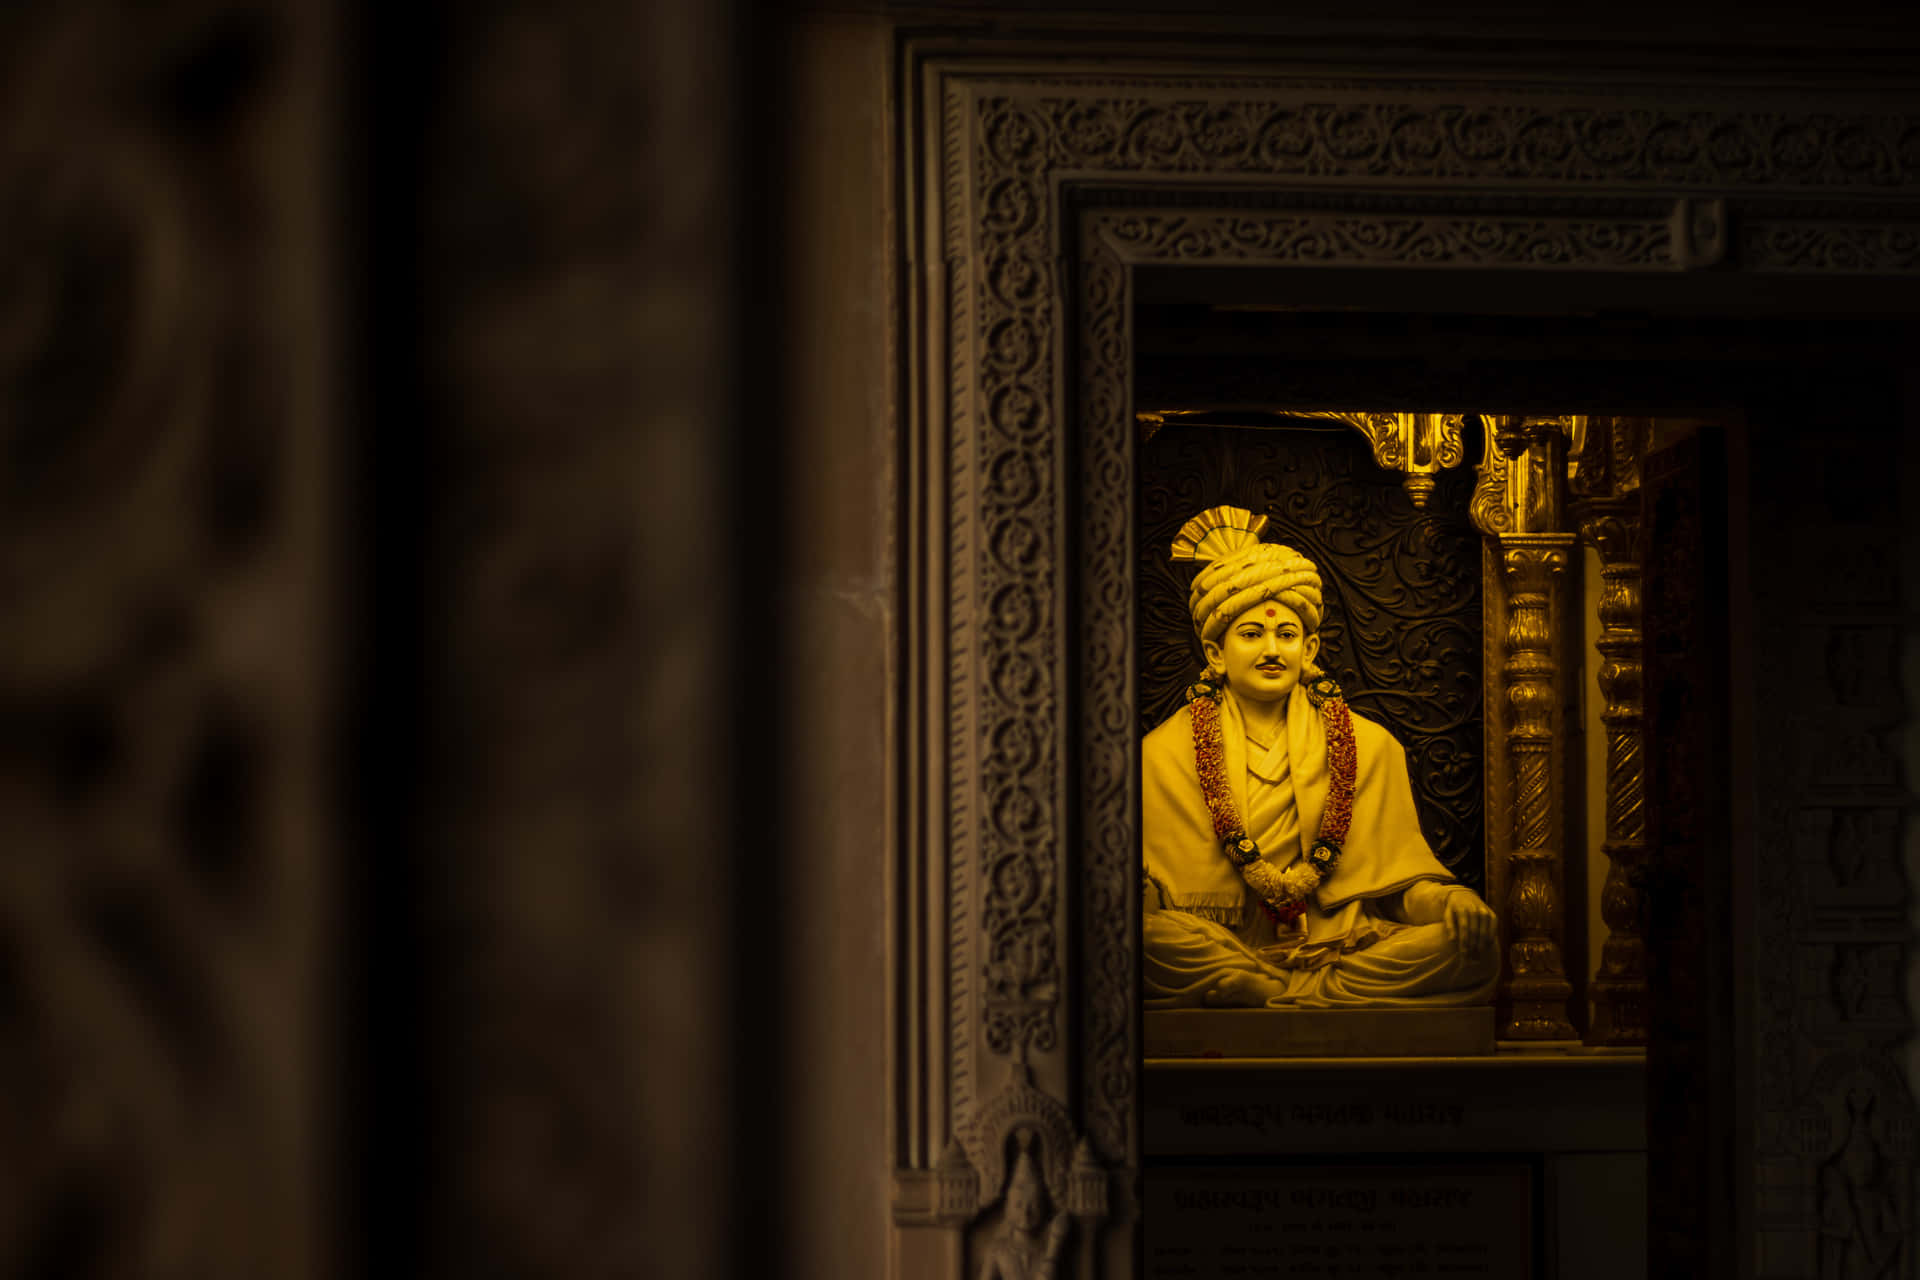 The Illustrious Shivaji Maharaj, India’s Celebrated Warrior-King